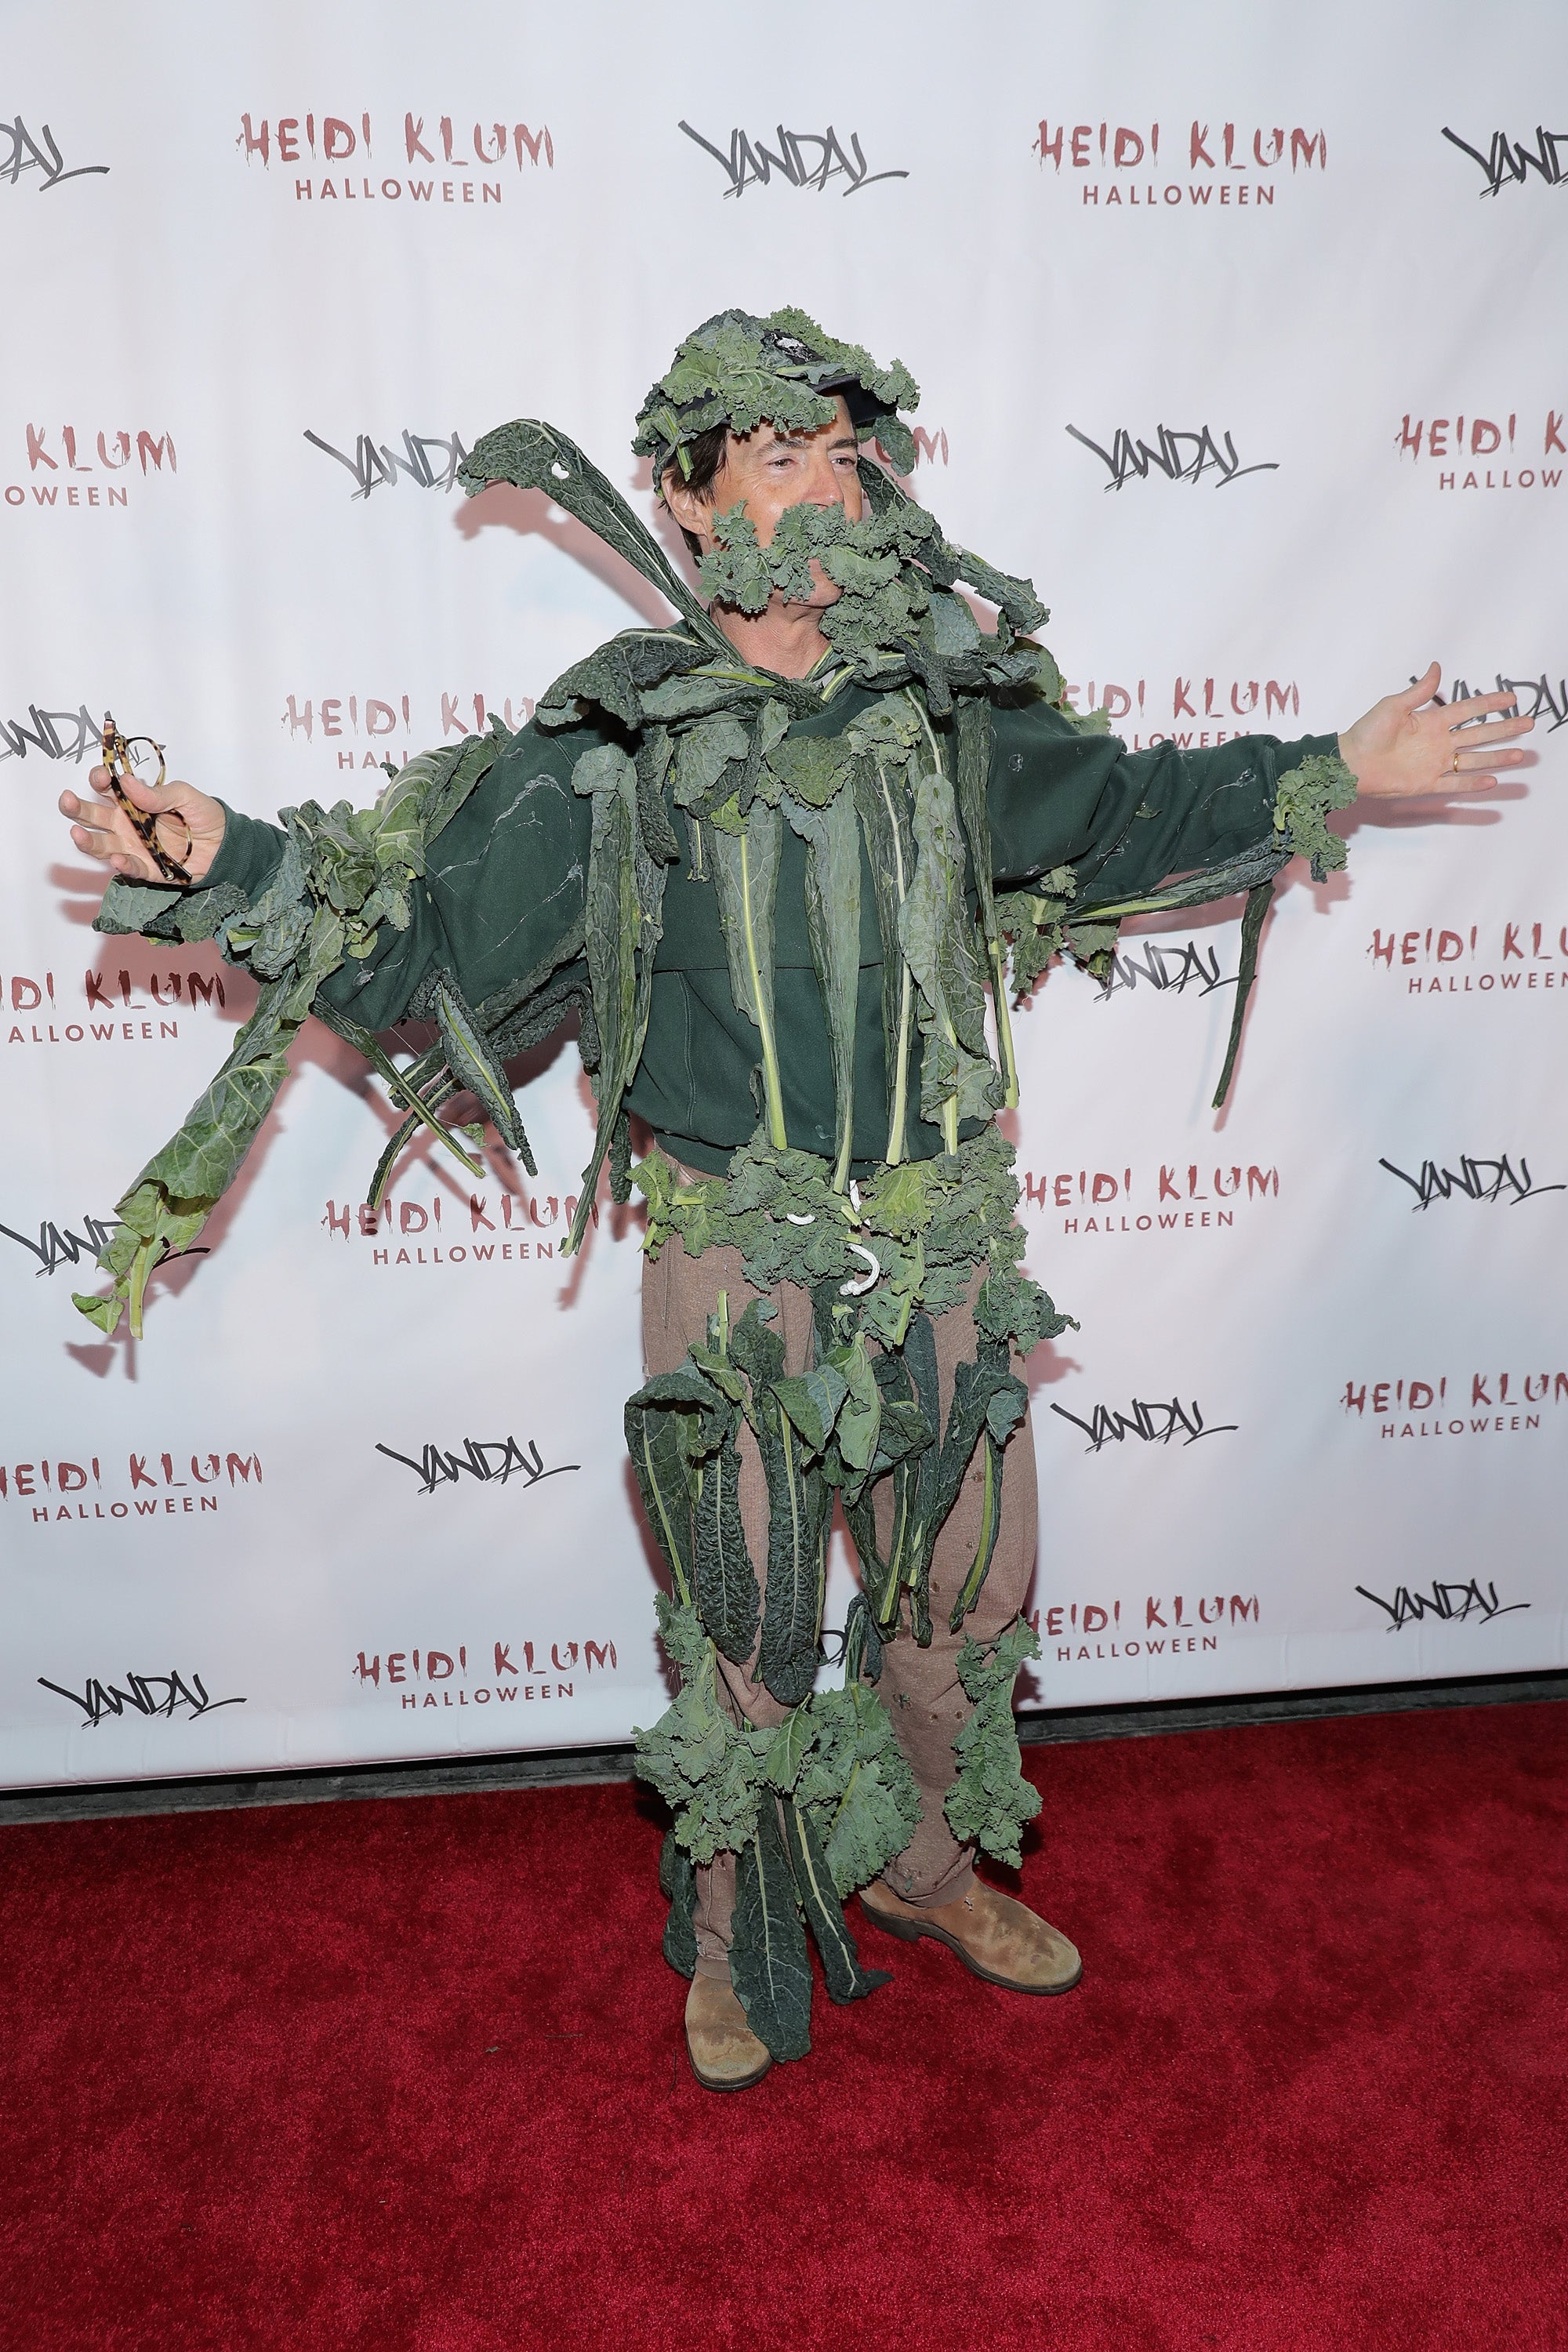 Kyle MacLachlan as kale